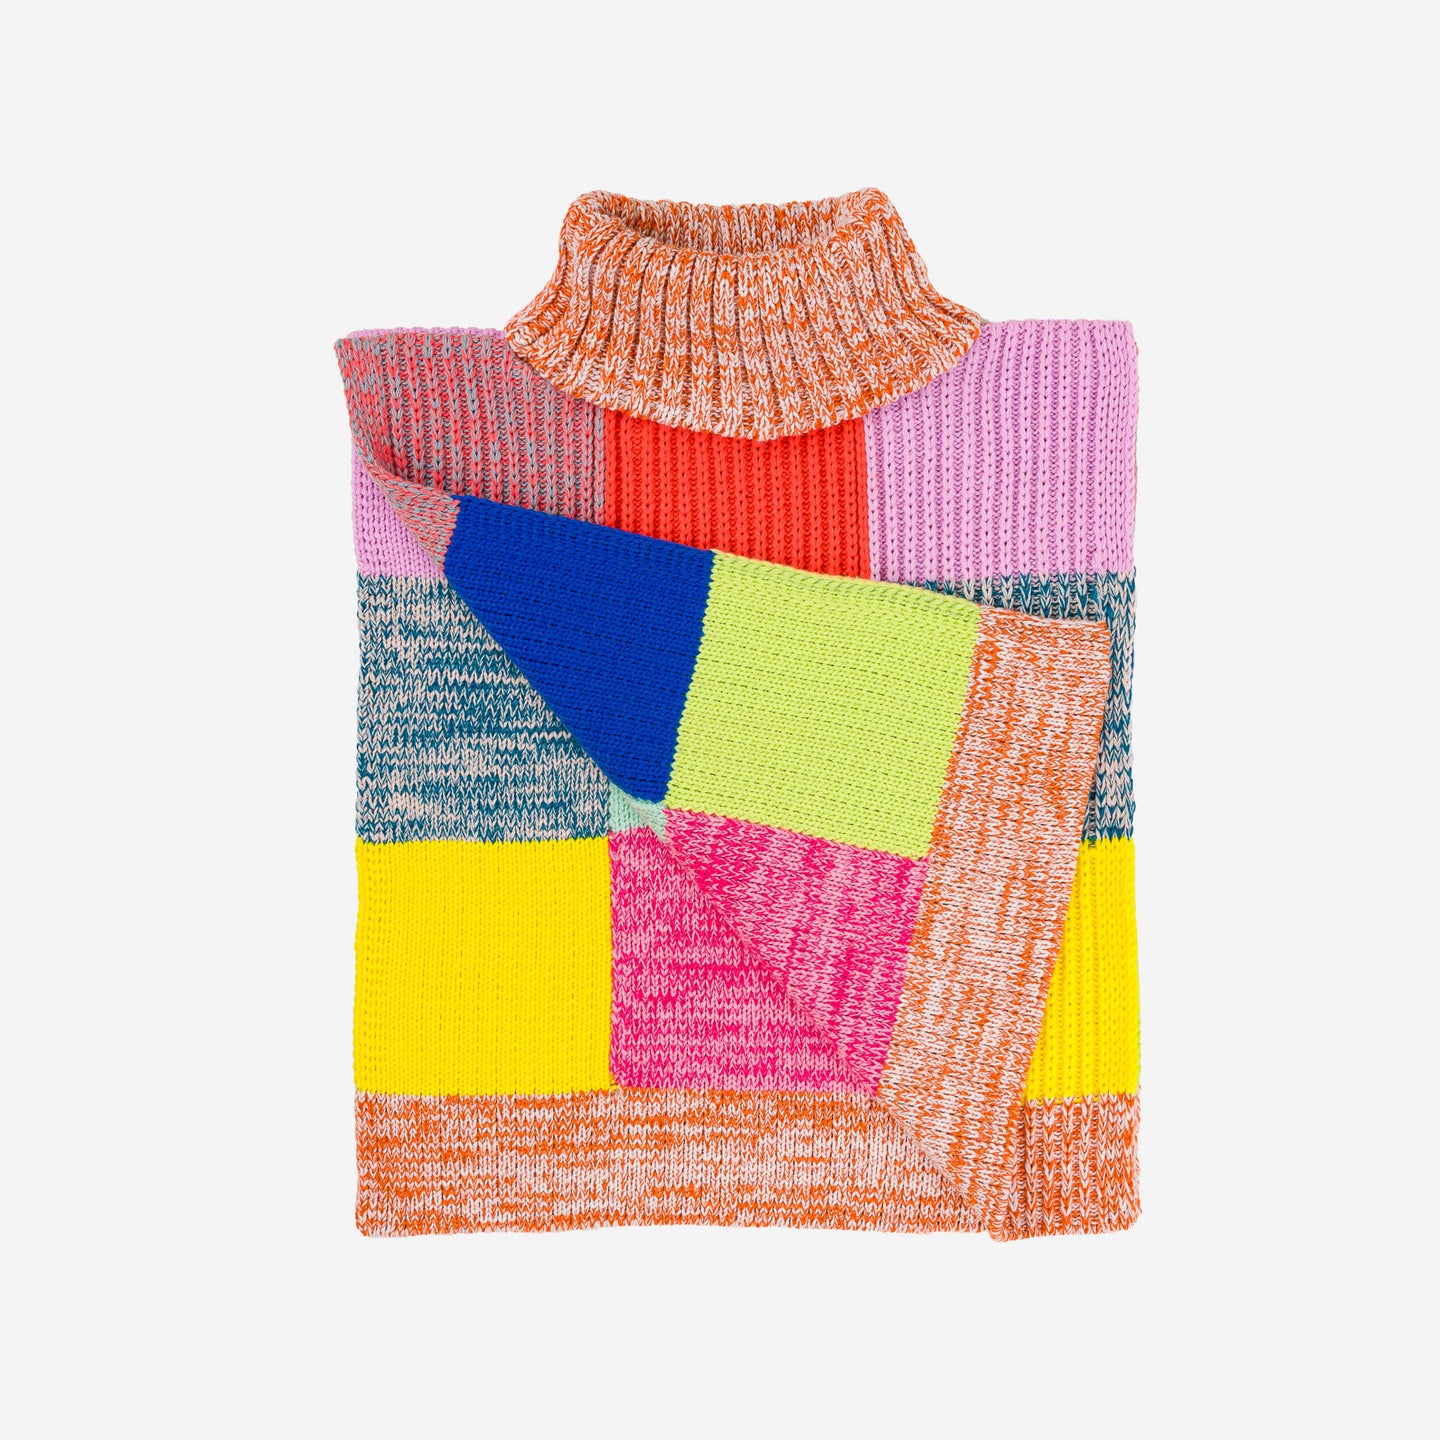 Patchwork Dickie Knit Colorful Vest Sweater Knit Vest Turtleneck